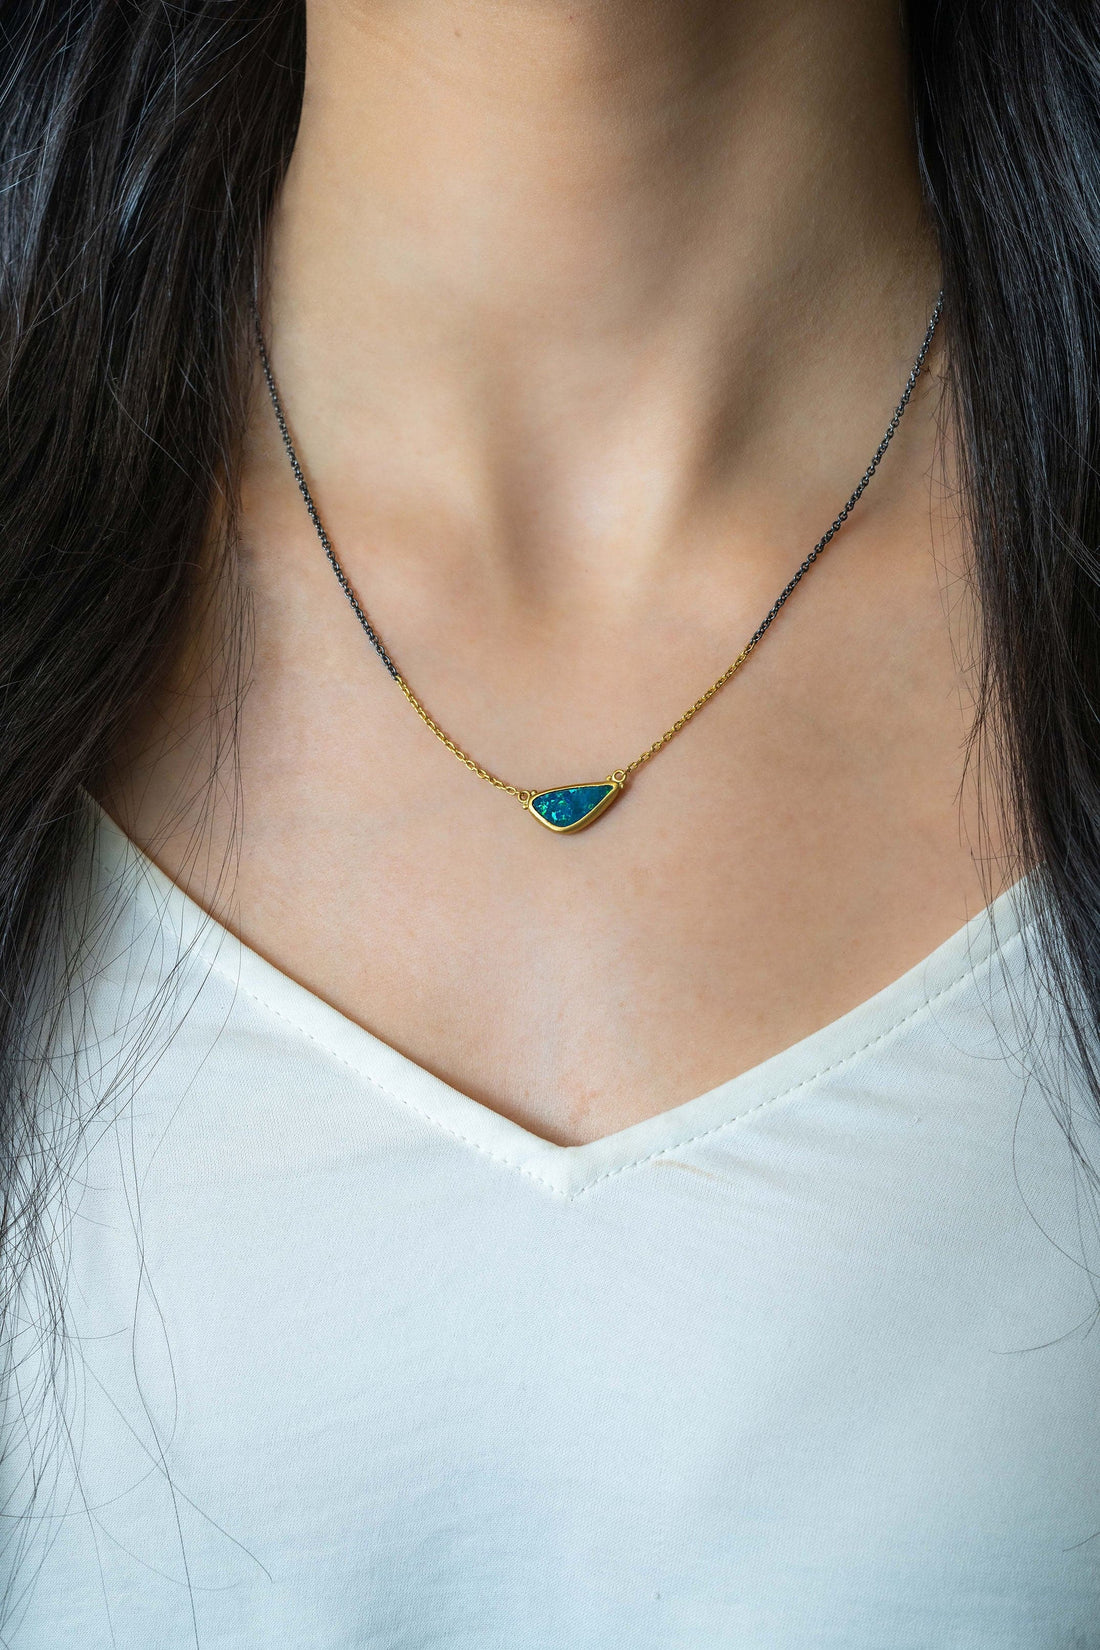 Lika Behar 'Ocean' Opal Doublet Pendant Necklace modeled